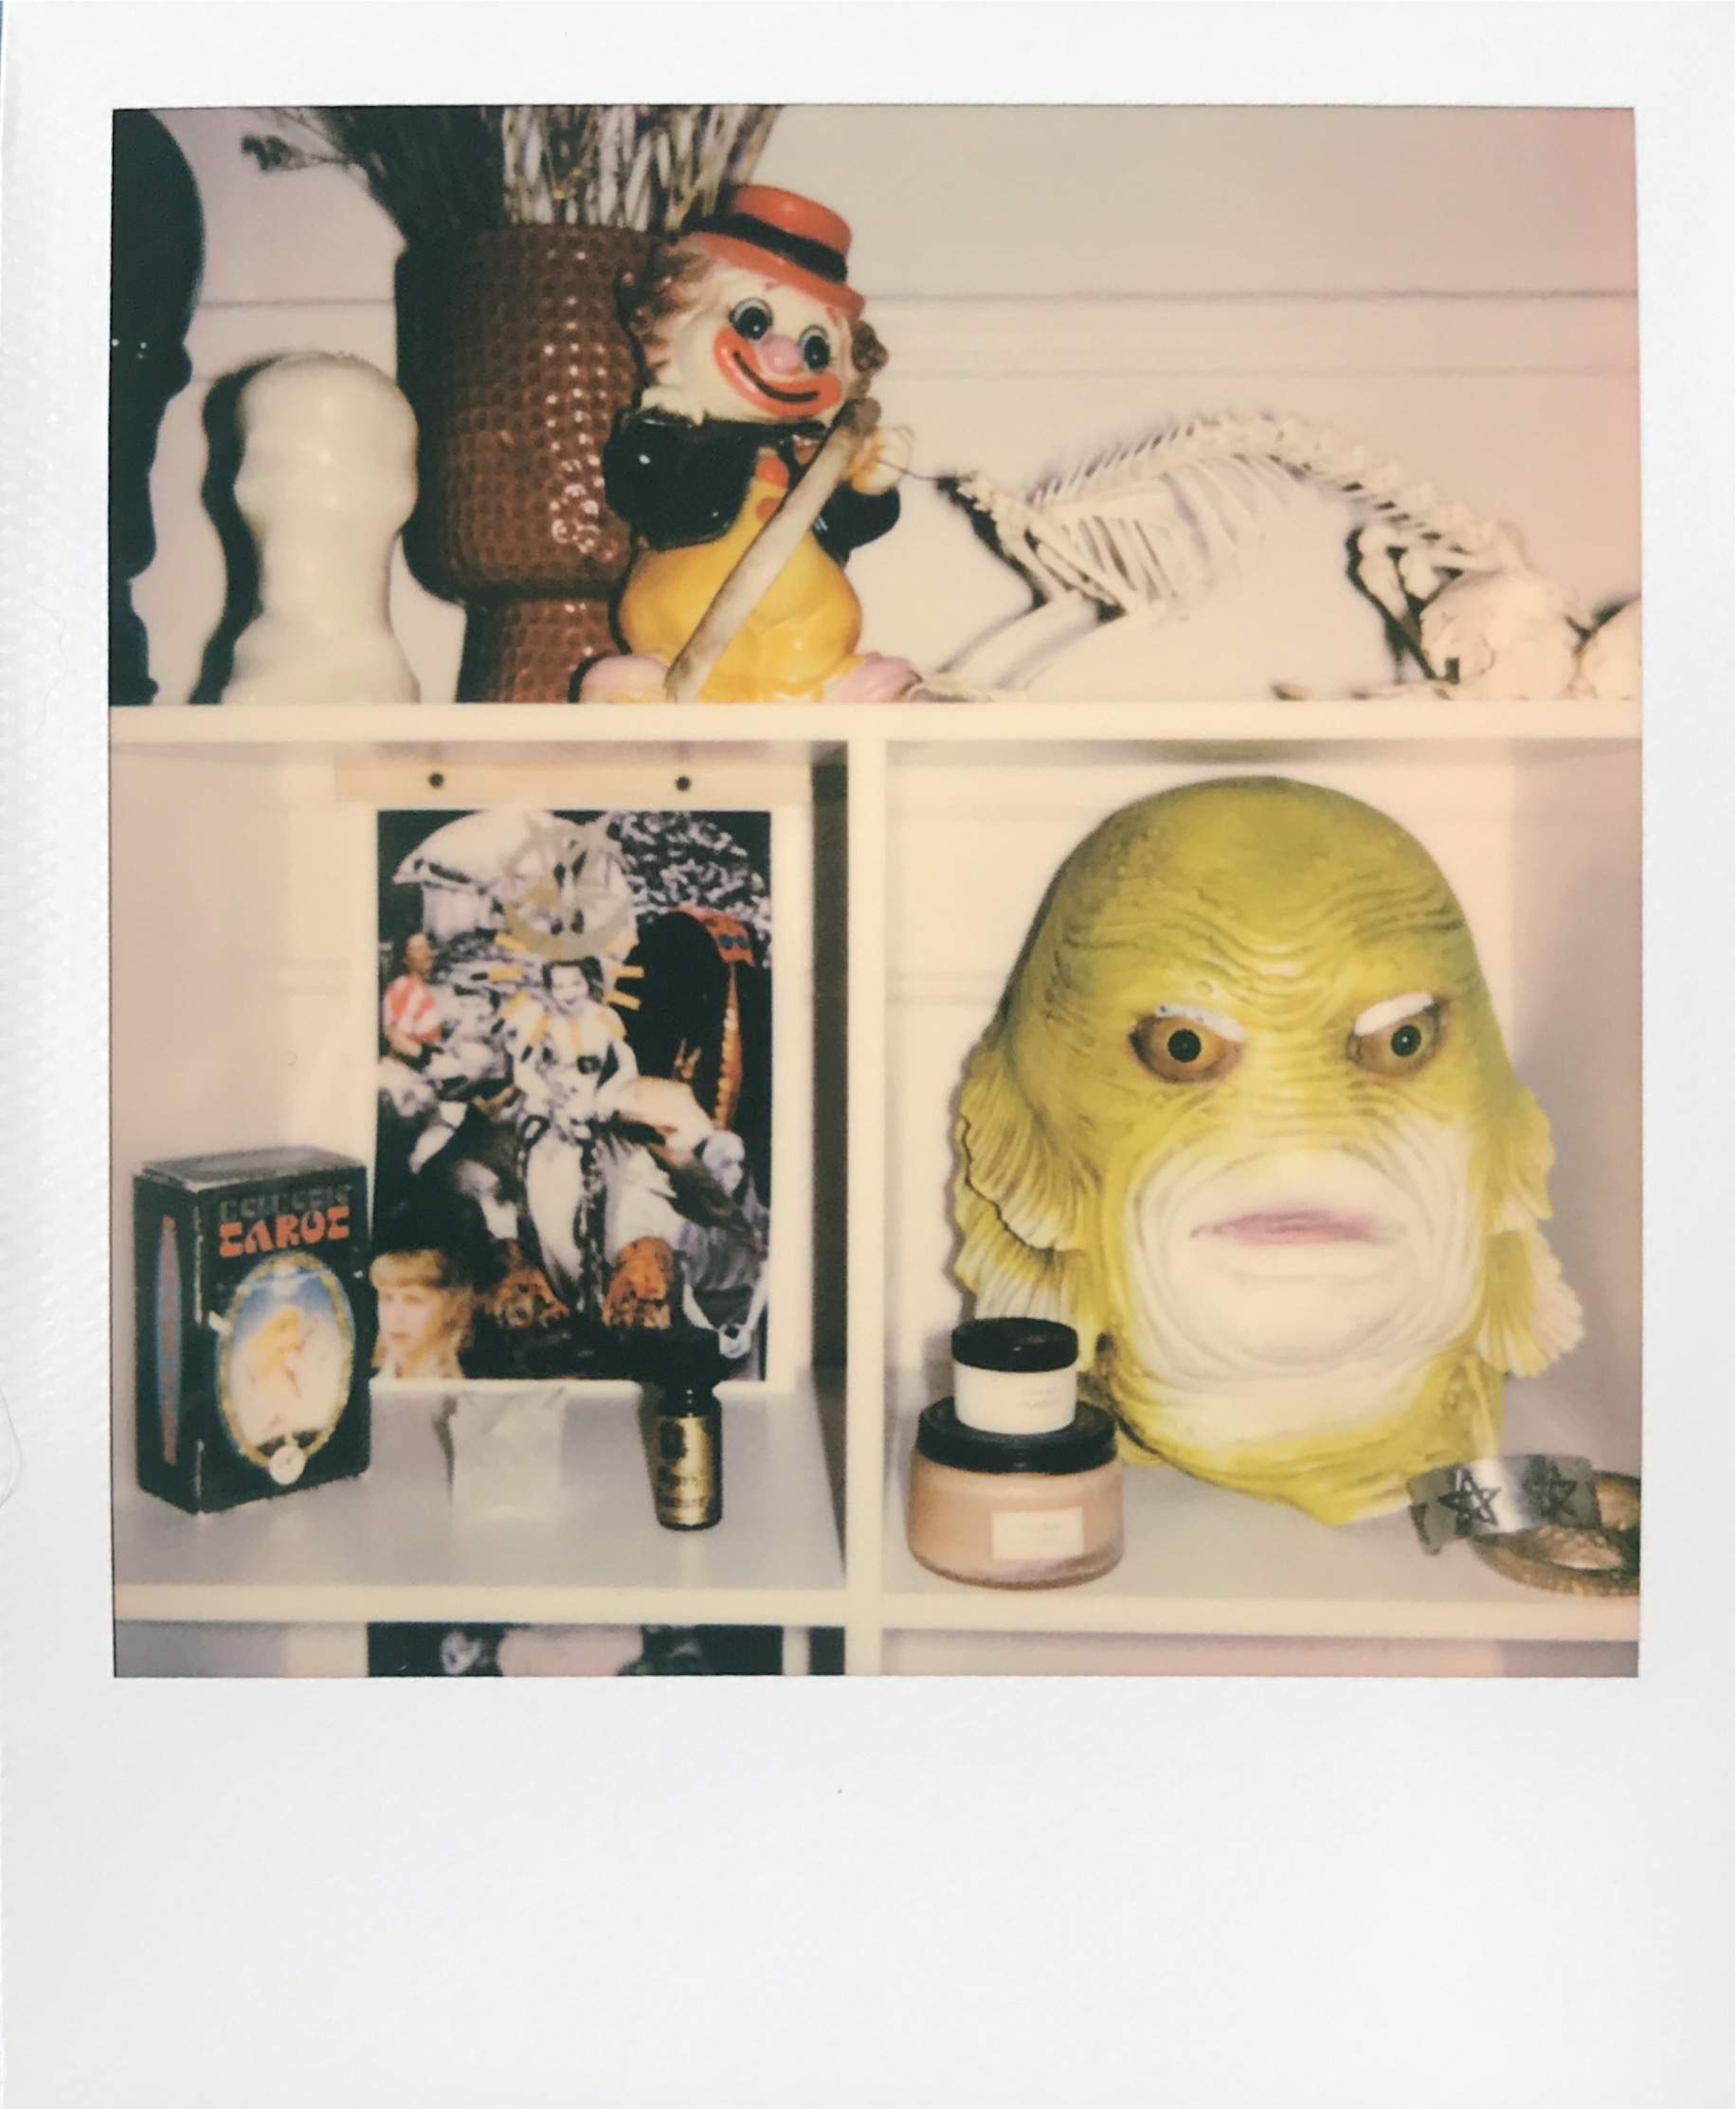 masks, clown, horror ephemera in meredith graves's home